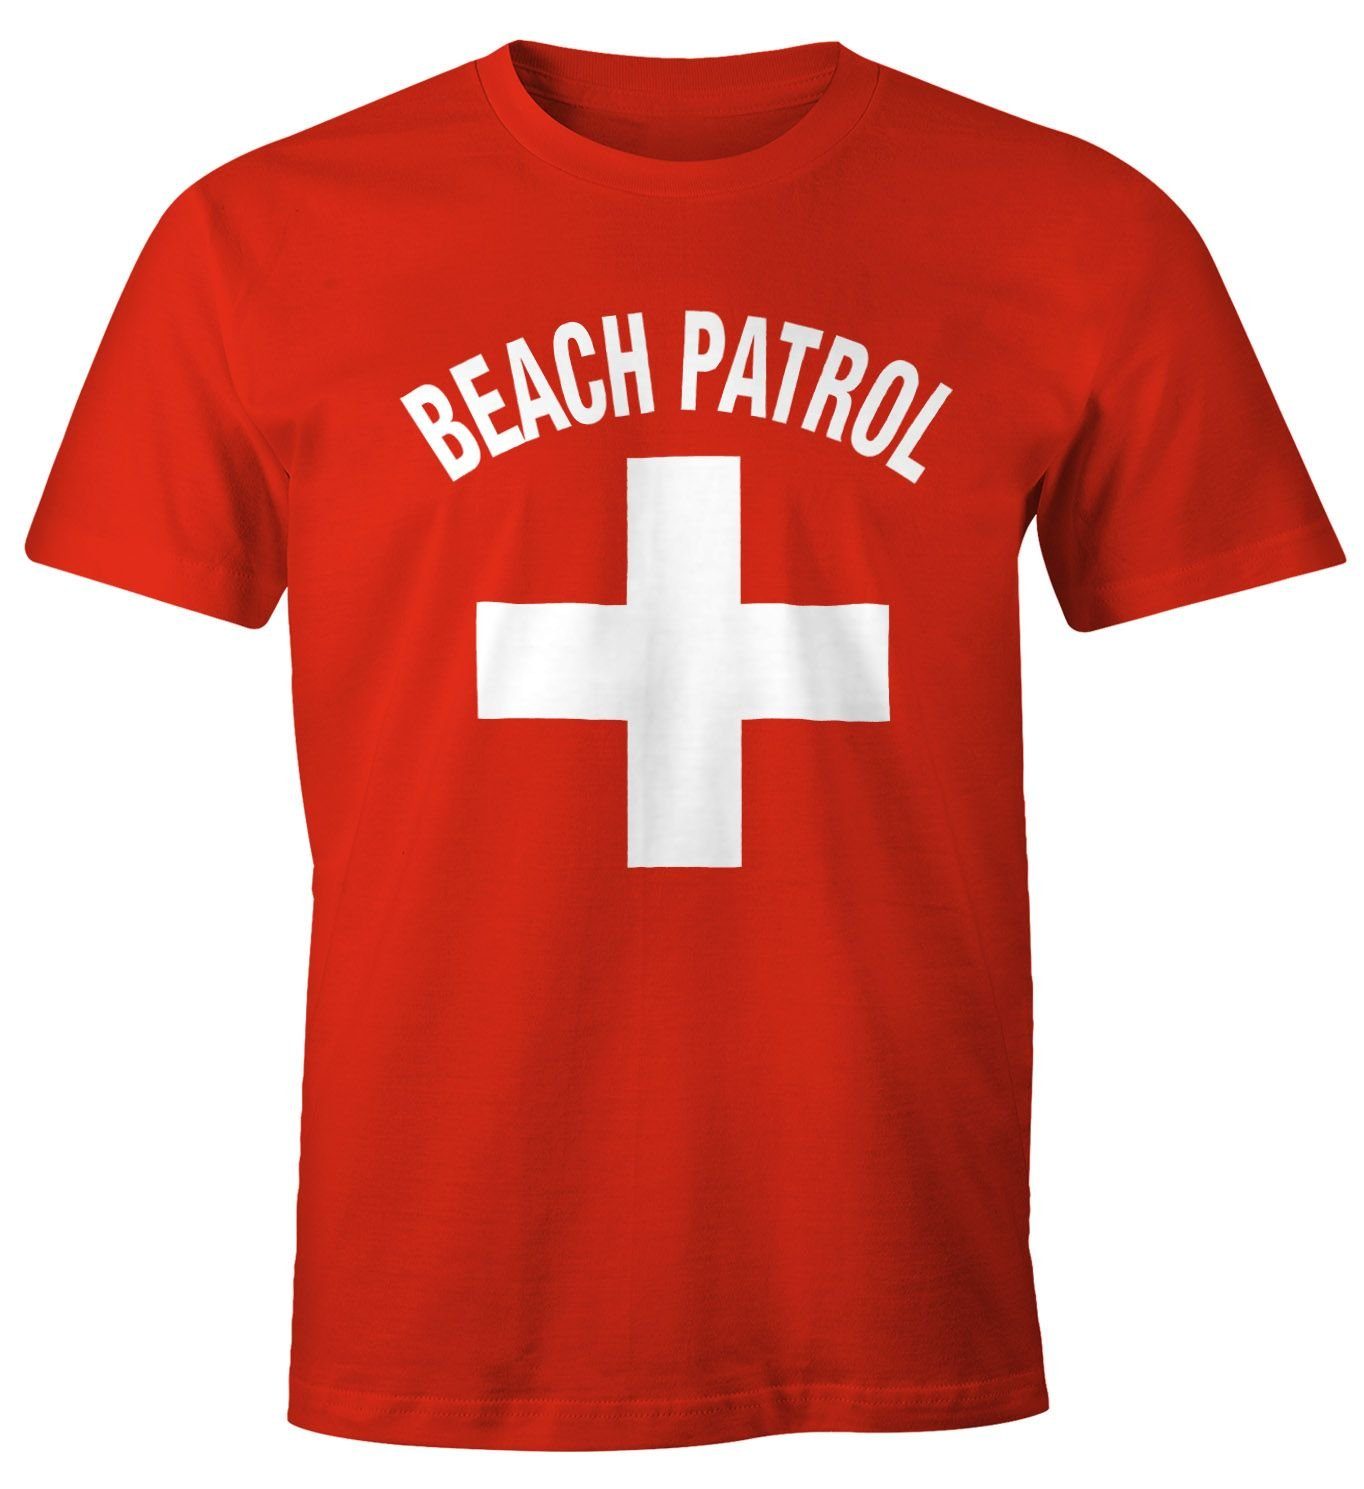 MoonWorks Print-Shirt Herren Print Fun-Shirt T-Shirt mit Patrol Beach Moonworks®